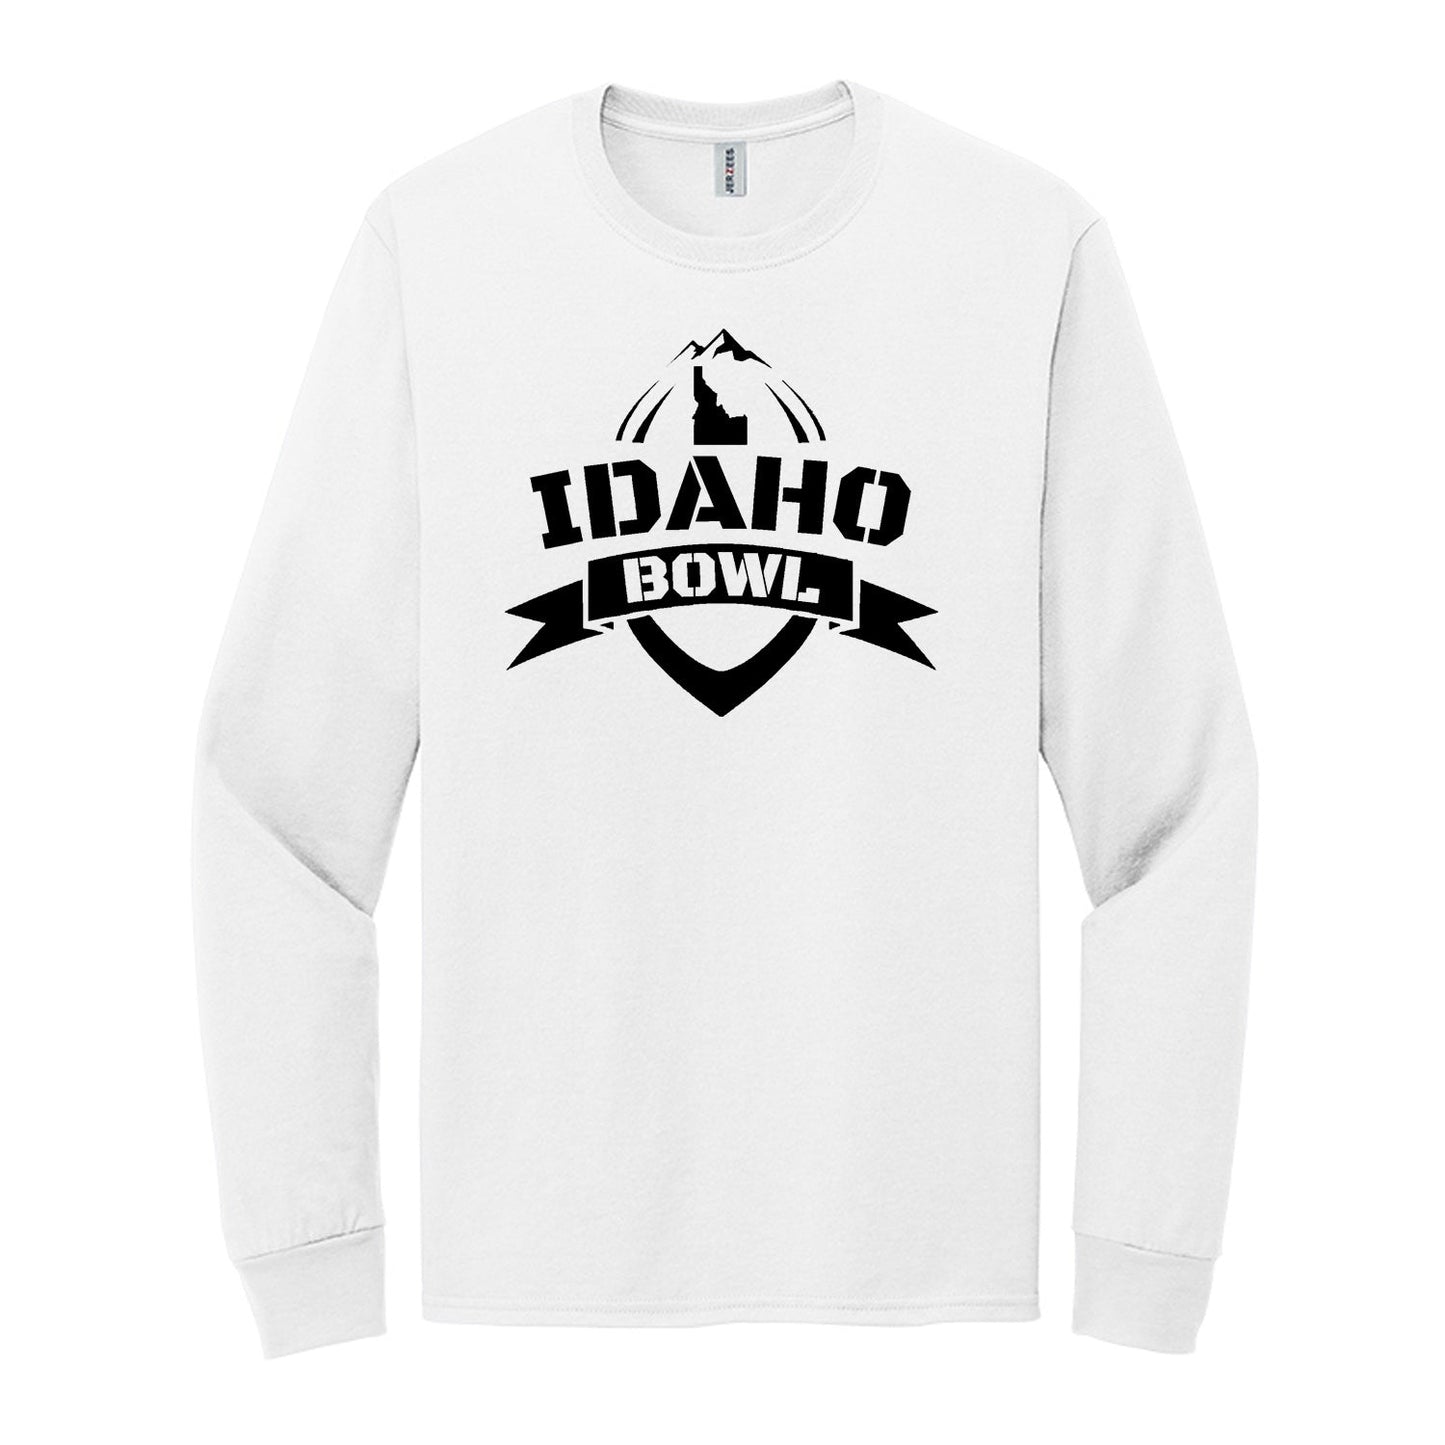 Idaho Bowl - YOUTH Premium Long Sleeve T-Shirt - 2 colors available